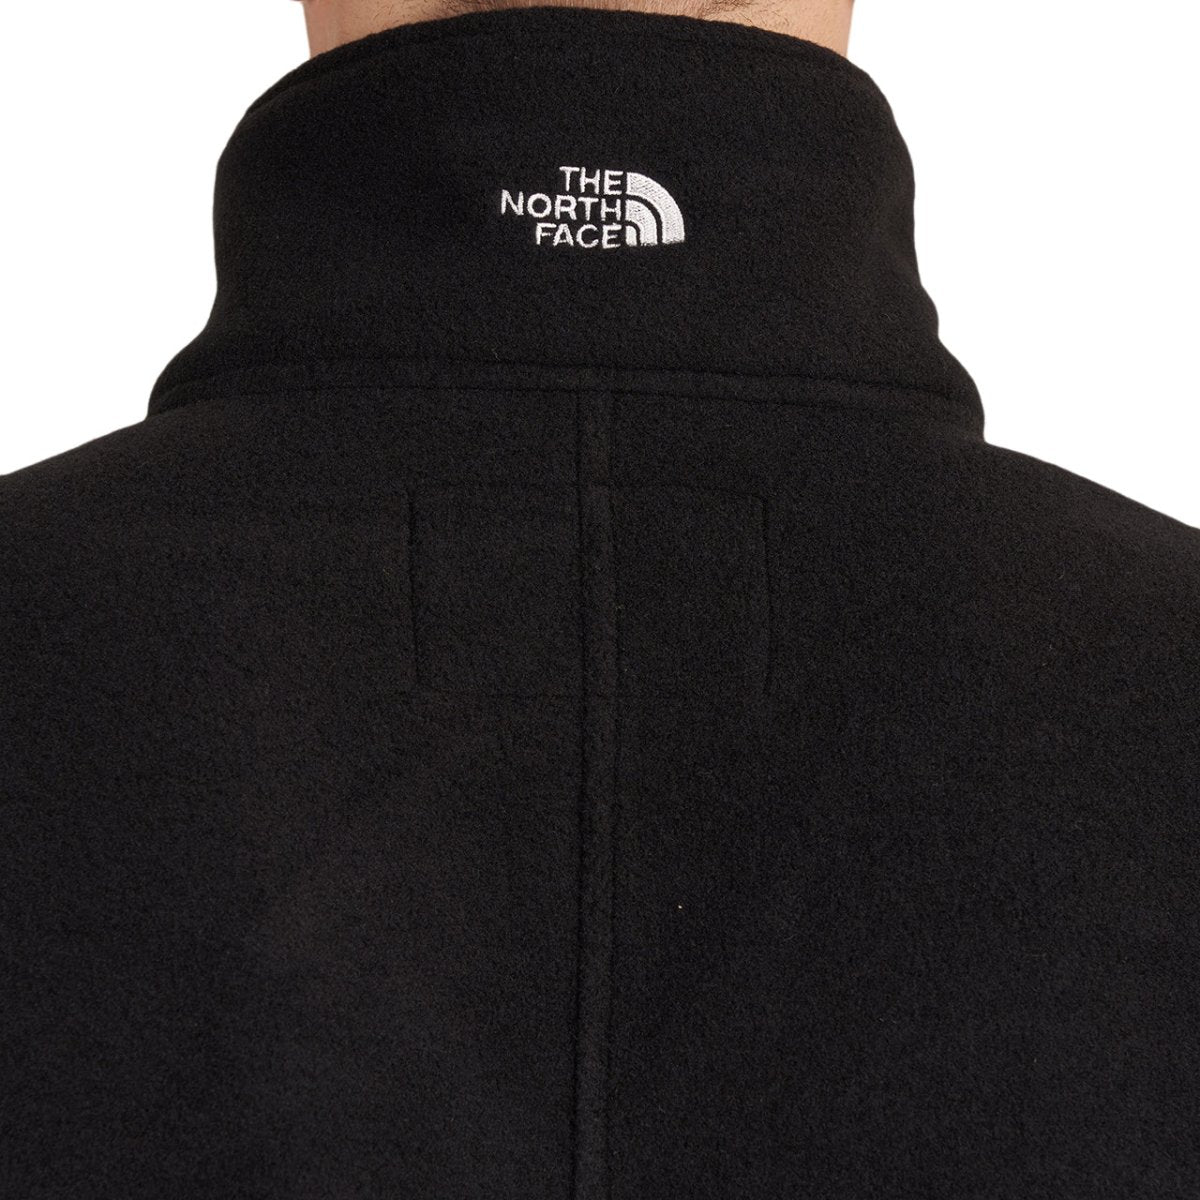 The North Face Origins '86 Mountain Sweatshirt (Navy)  - Allike Store